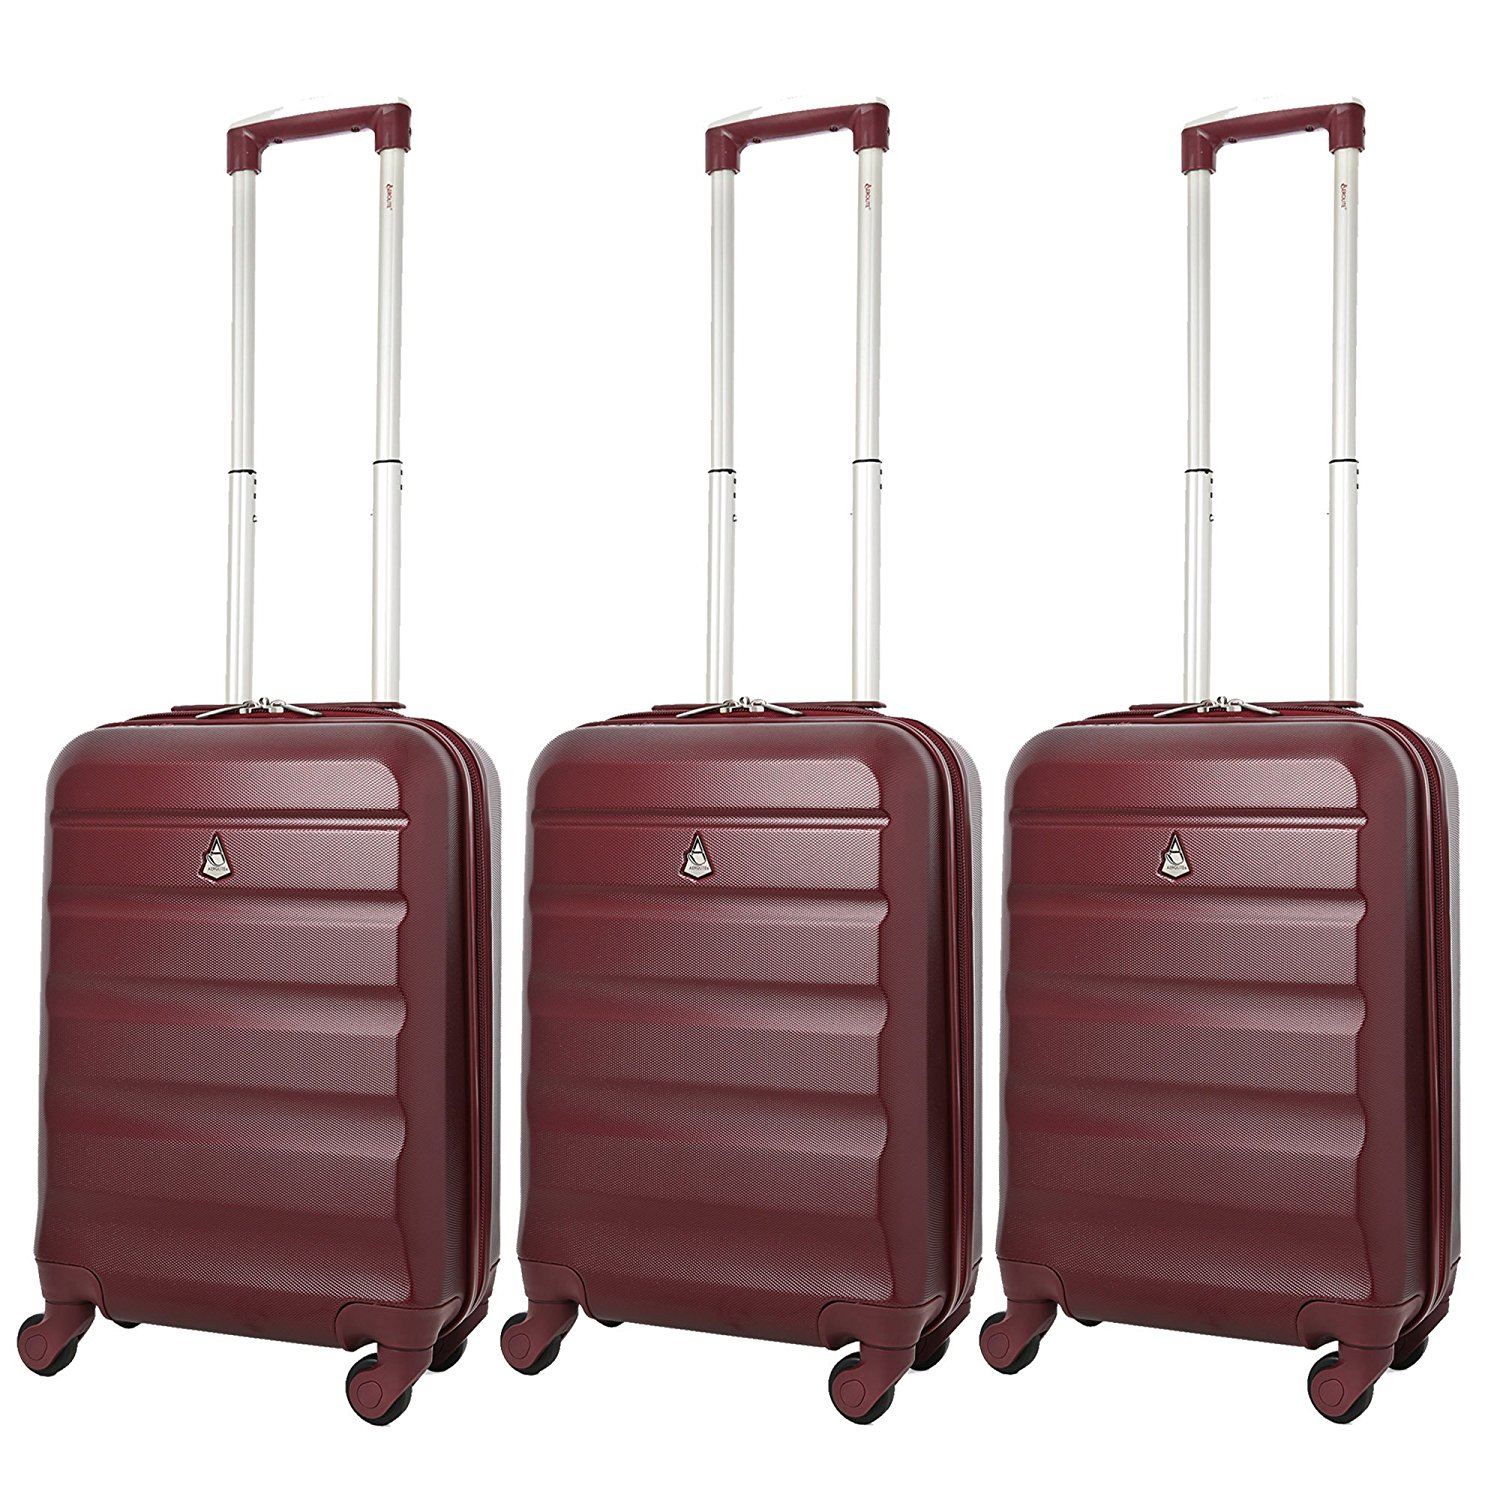 Aerolite Super Lightweight ABS Hard Shell Suitcase - 4 Wheels Set of 3